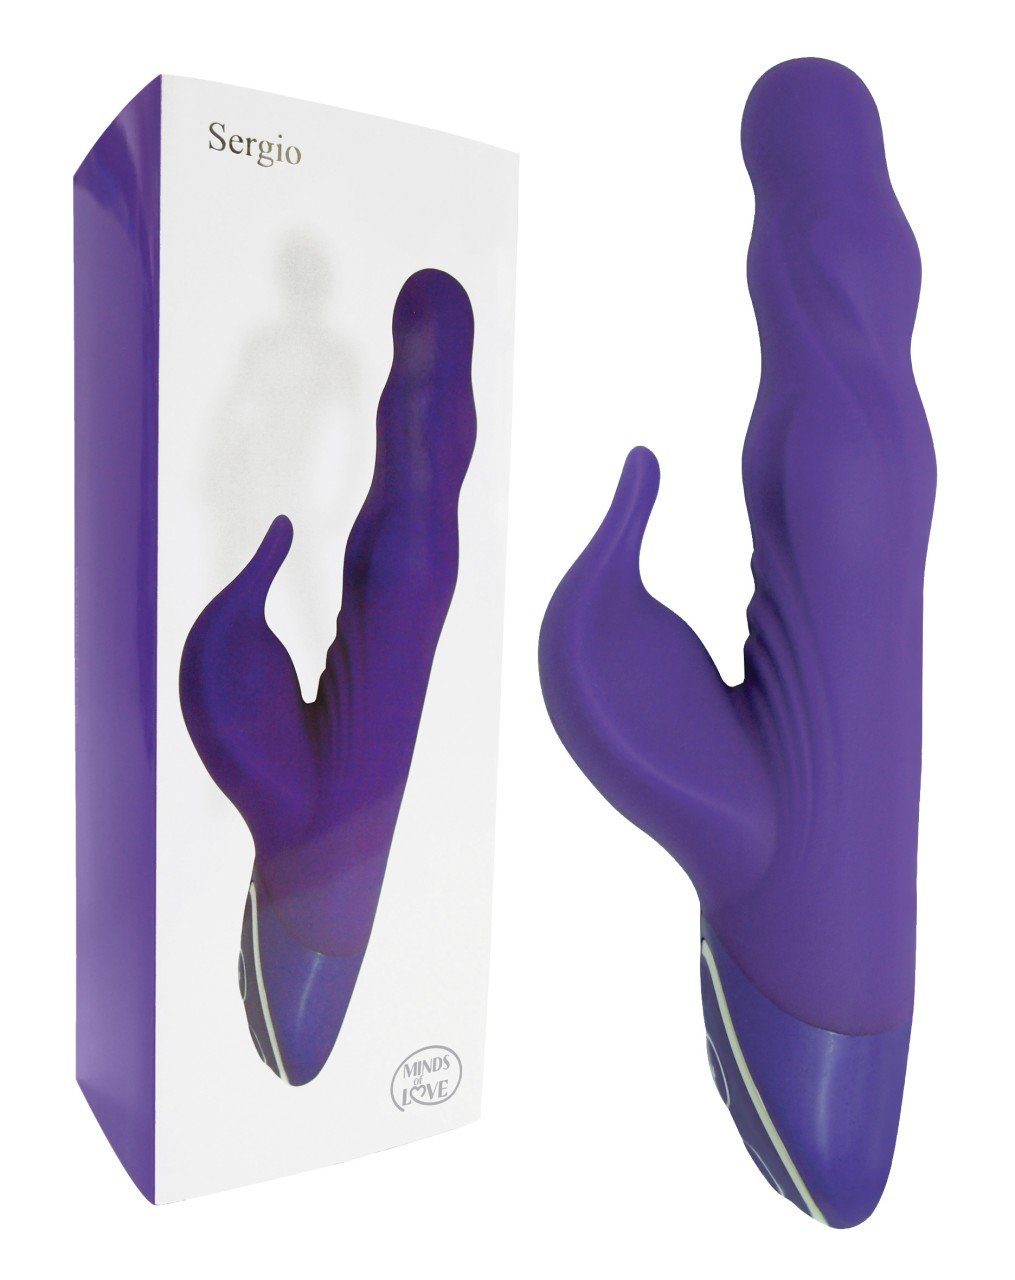 MINDS of LOVE Rabbit-Vibrator MINDS LOVE of purple Sergio